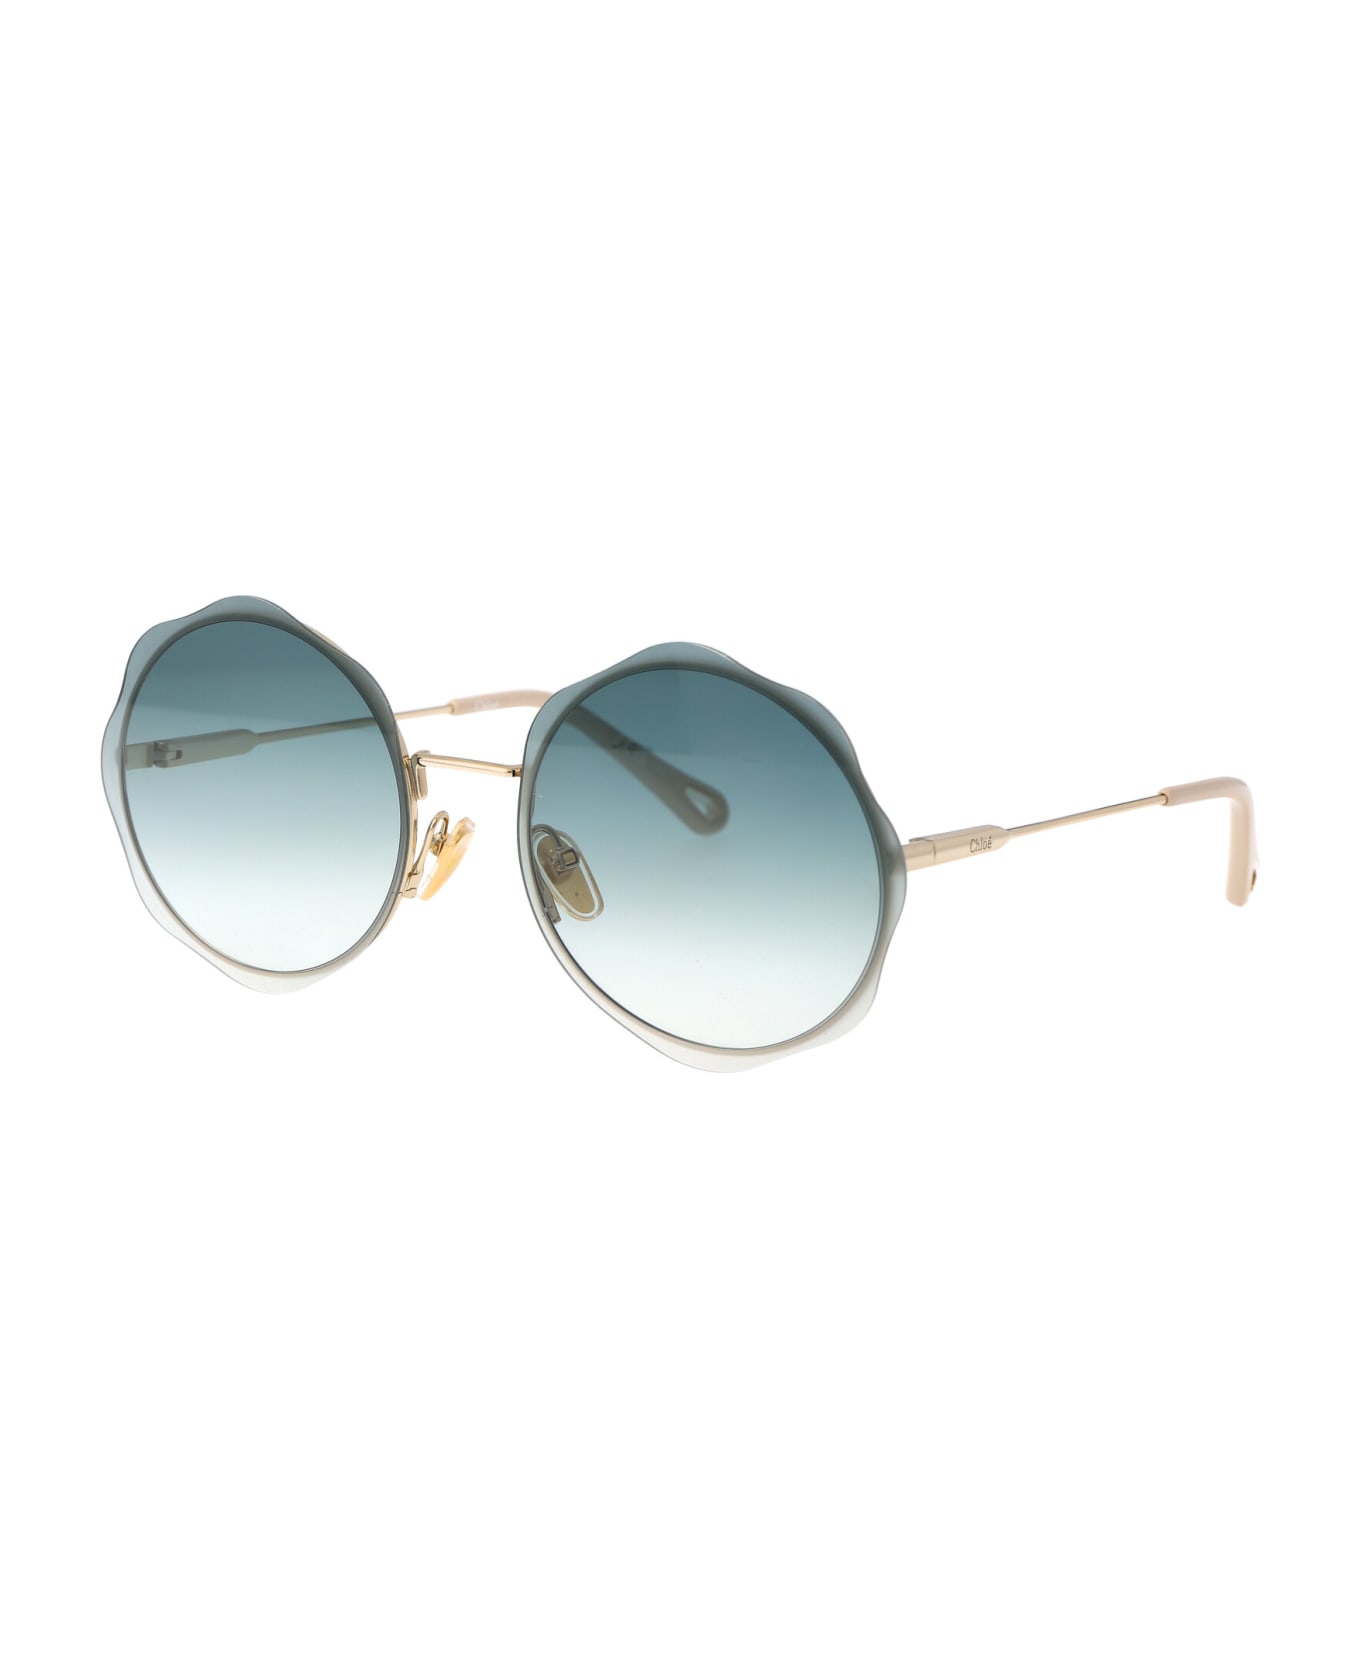 Chloé Eyewear Ch0202s Sunglasses - 002 GOLD GOLD GREEN